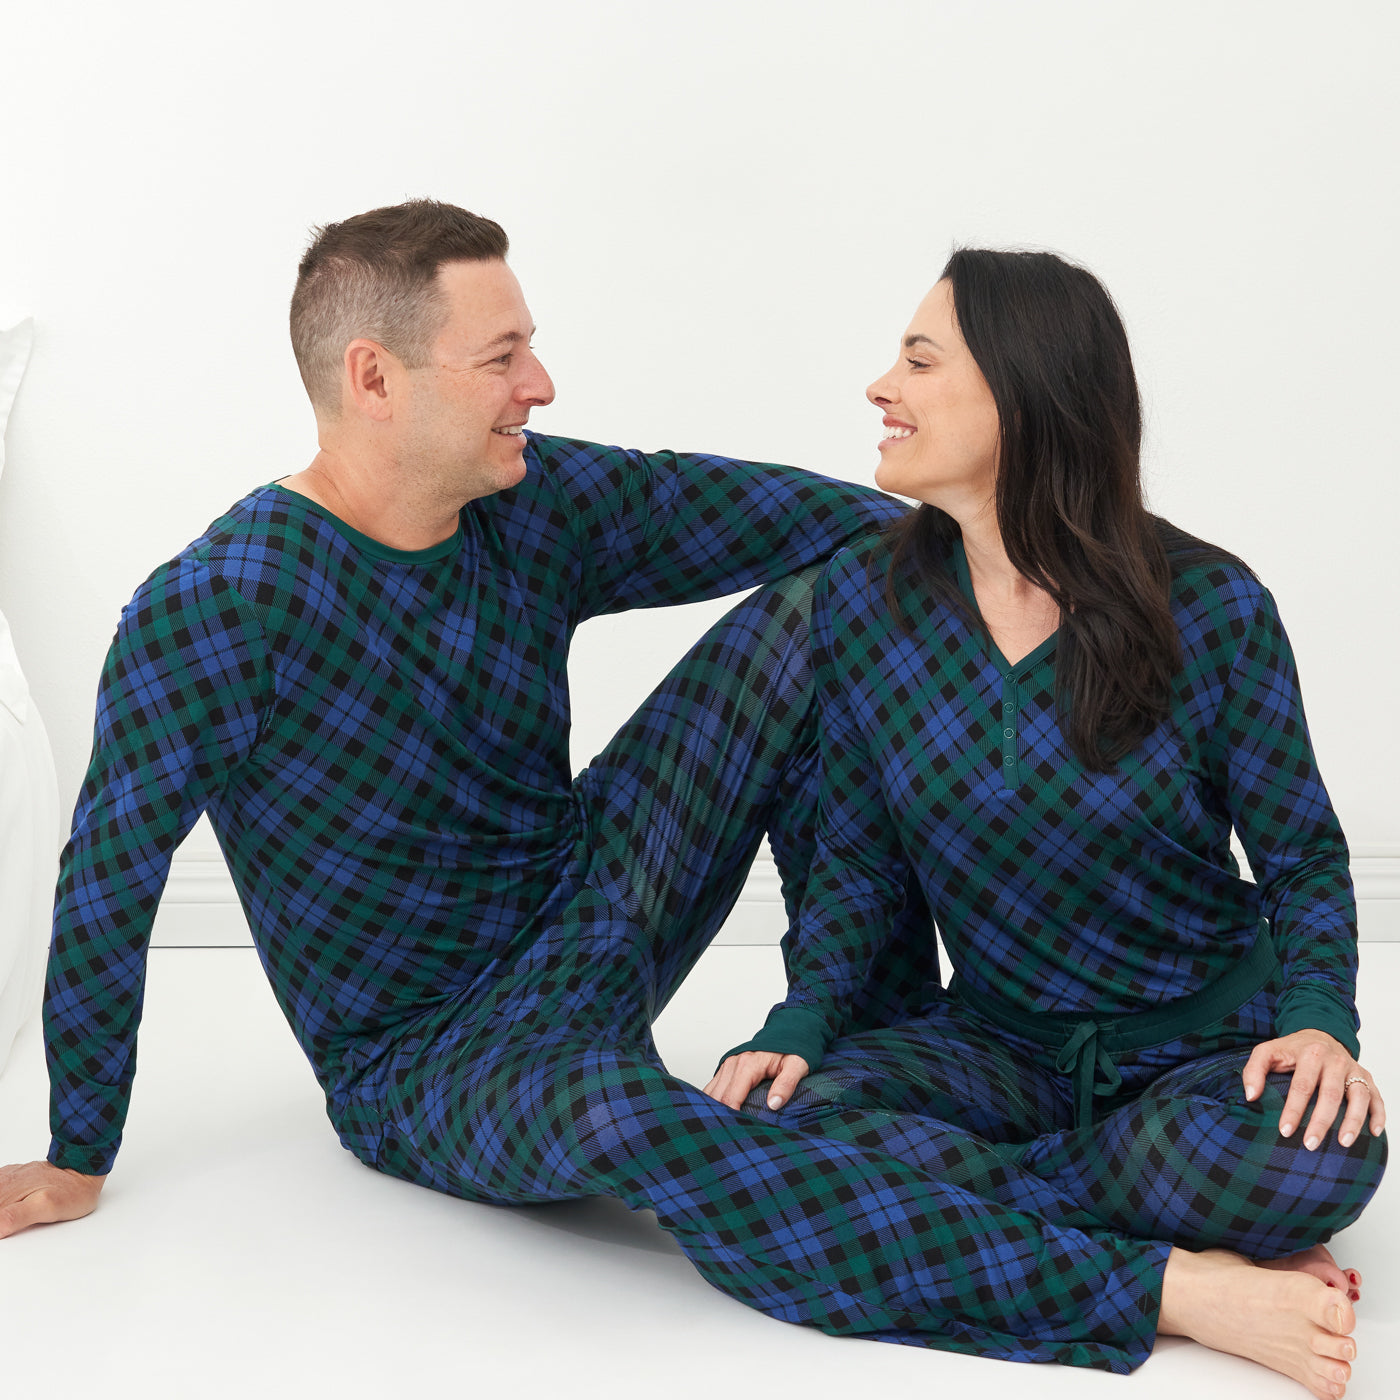 Man and woman sitting on the ground wearing matching Emerald Plaid pajamas